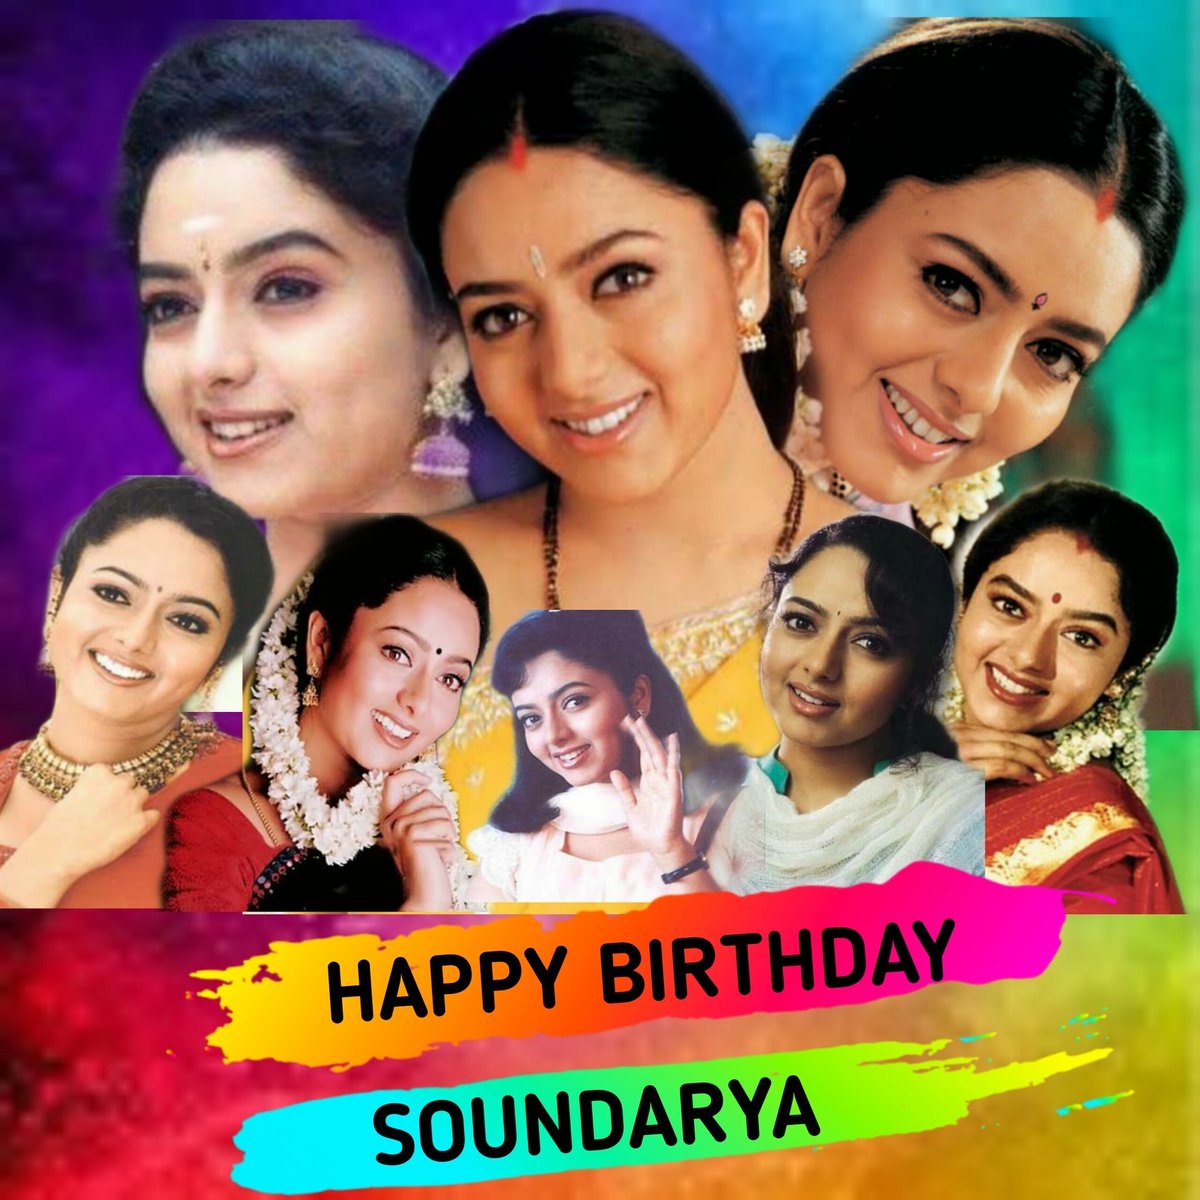 Remembering my all time favorite heroine #Soundarya on her birthday anniversary.
Folded hands

#HappyBirthdaySoundarya #actresssoundarya #HbdSoundarya #Tamilactress #actress🎬 #favouriteactress #evergreenactress